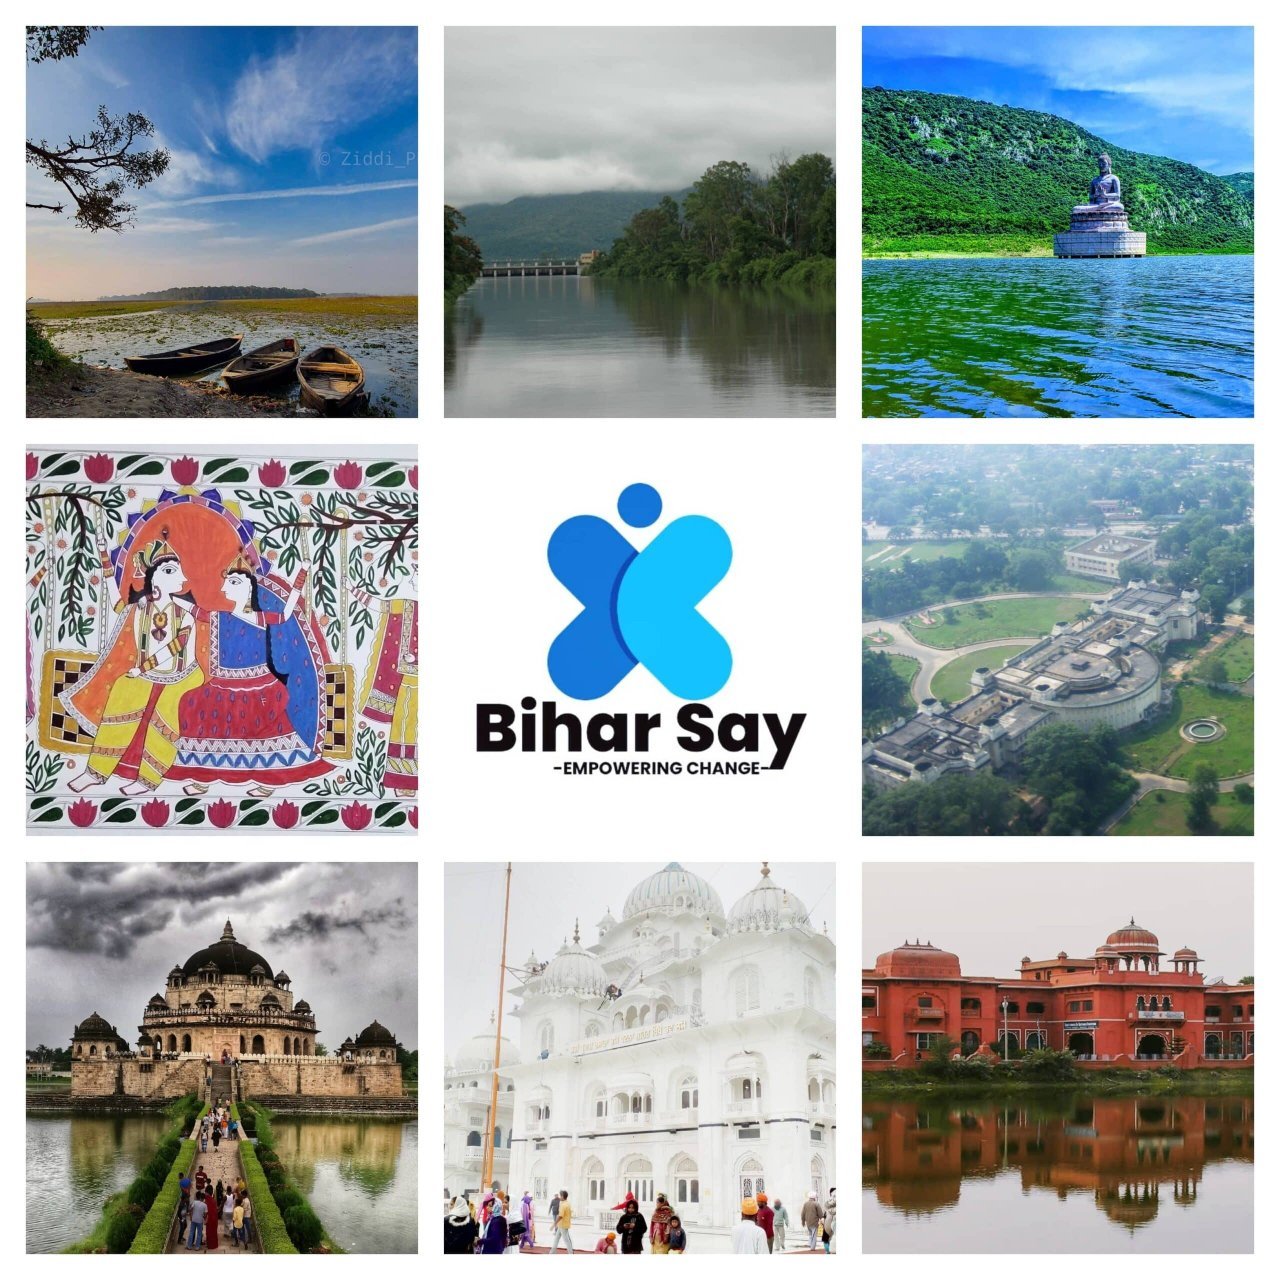 Biharsay-scaled (1) (2)